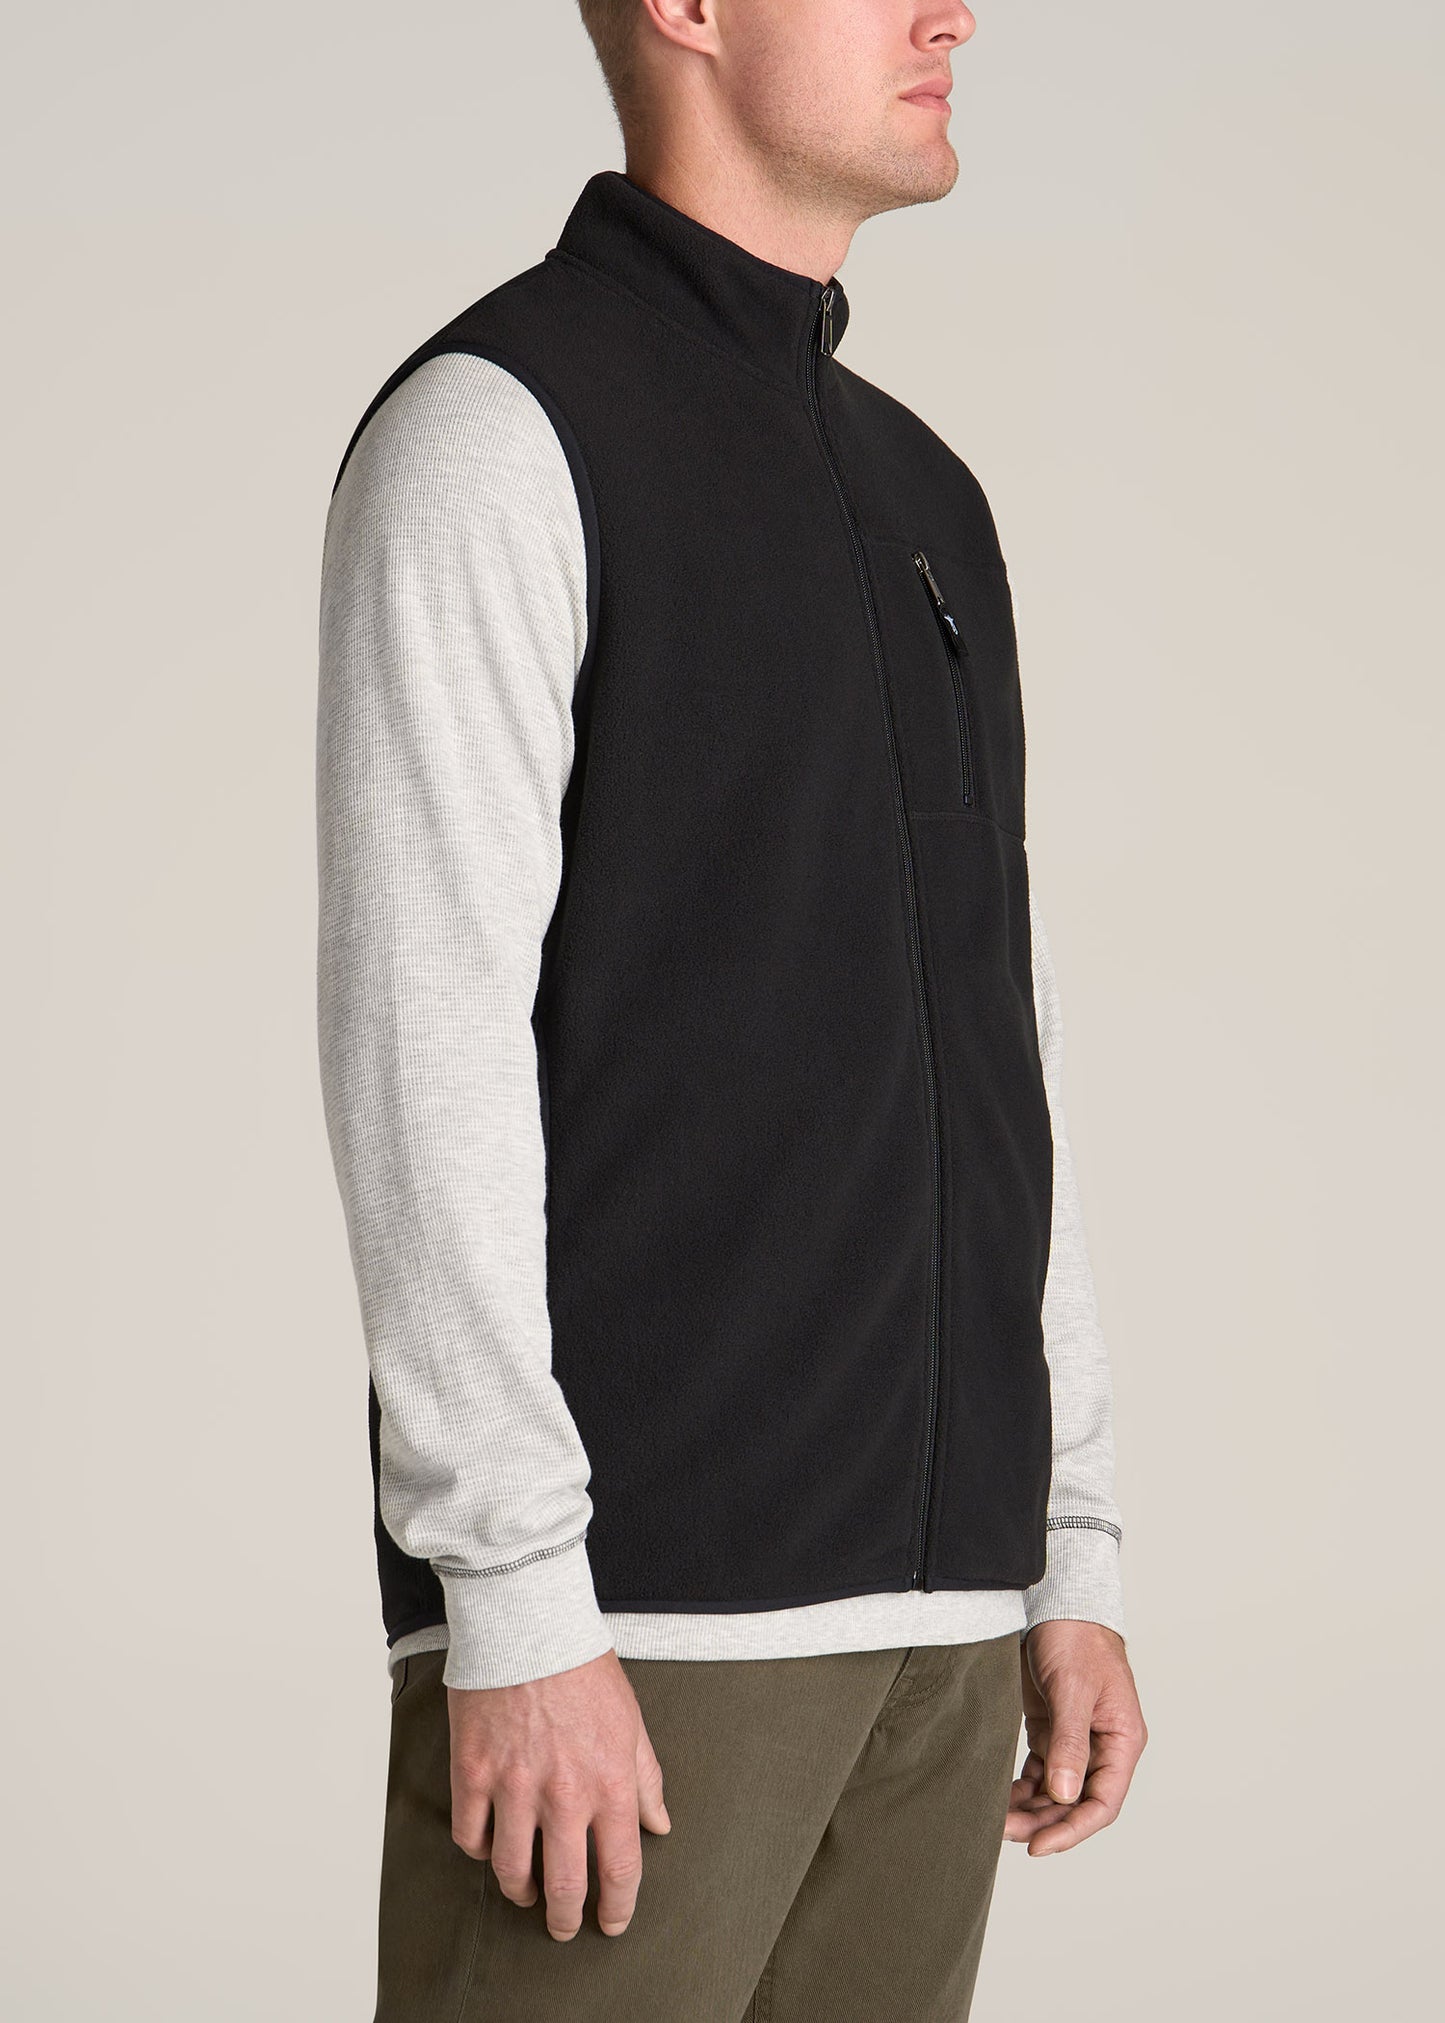 American-Tall-Men-Polar-Fleece-Sweater-Full-Zip-Vest-Black-side